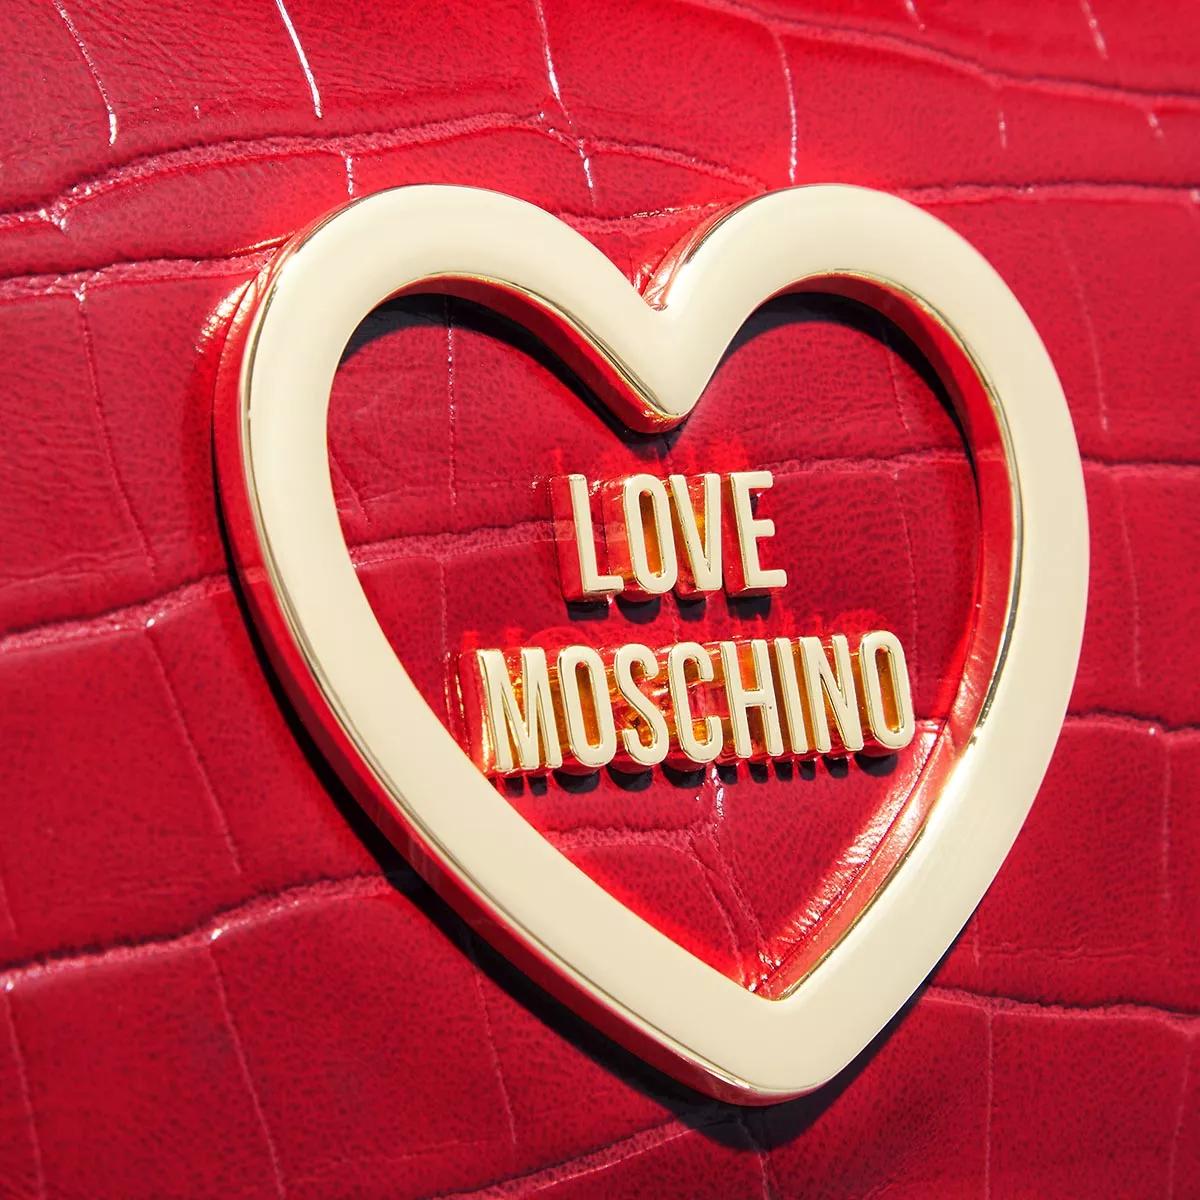 Love Moschino Satchels Hug in rood